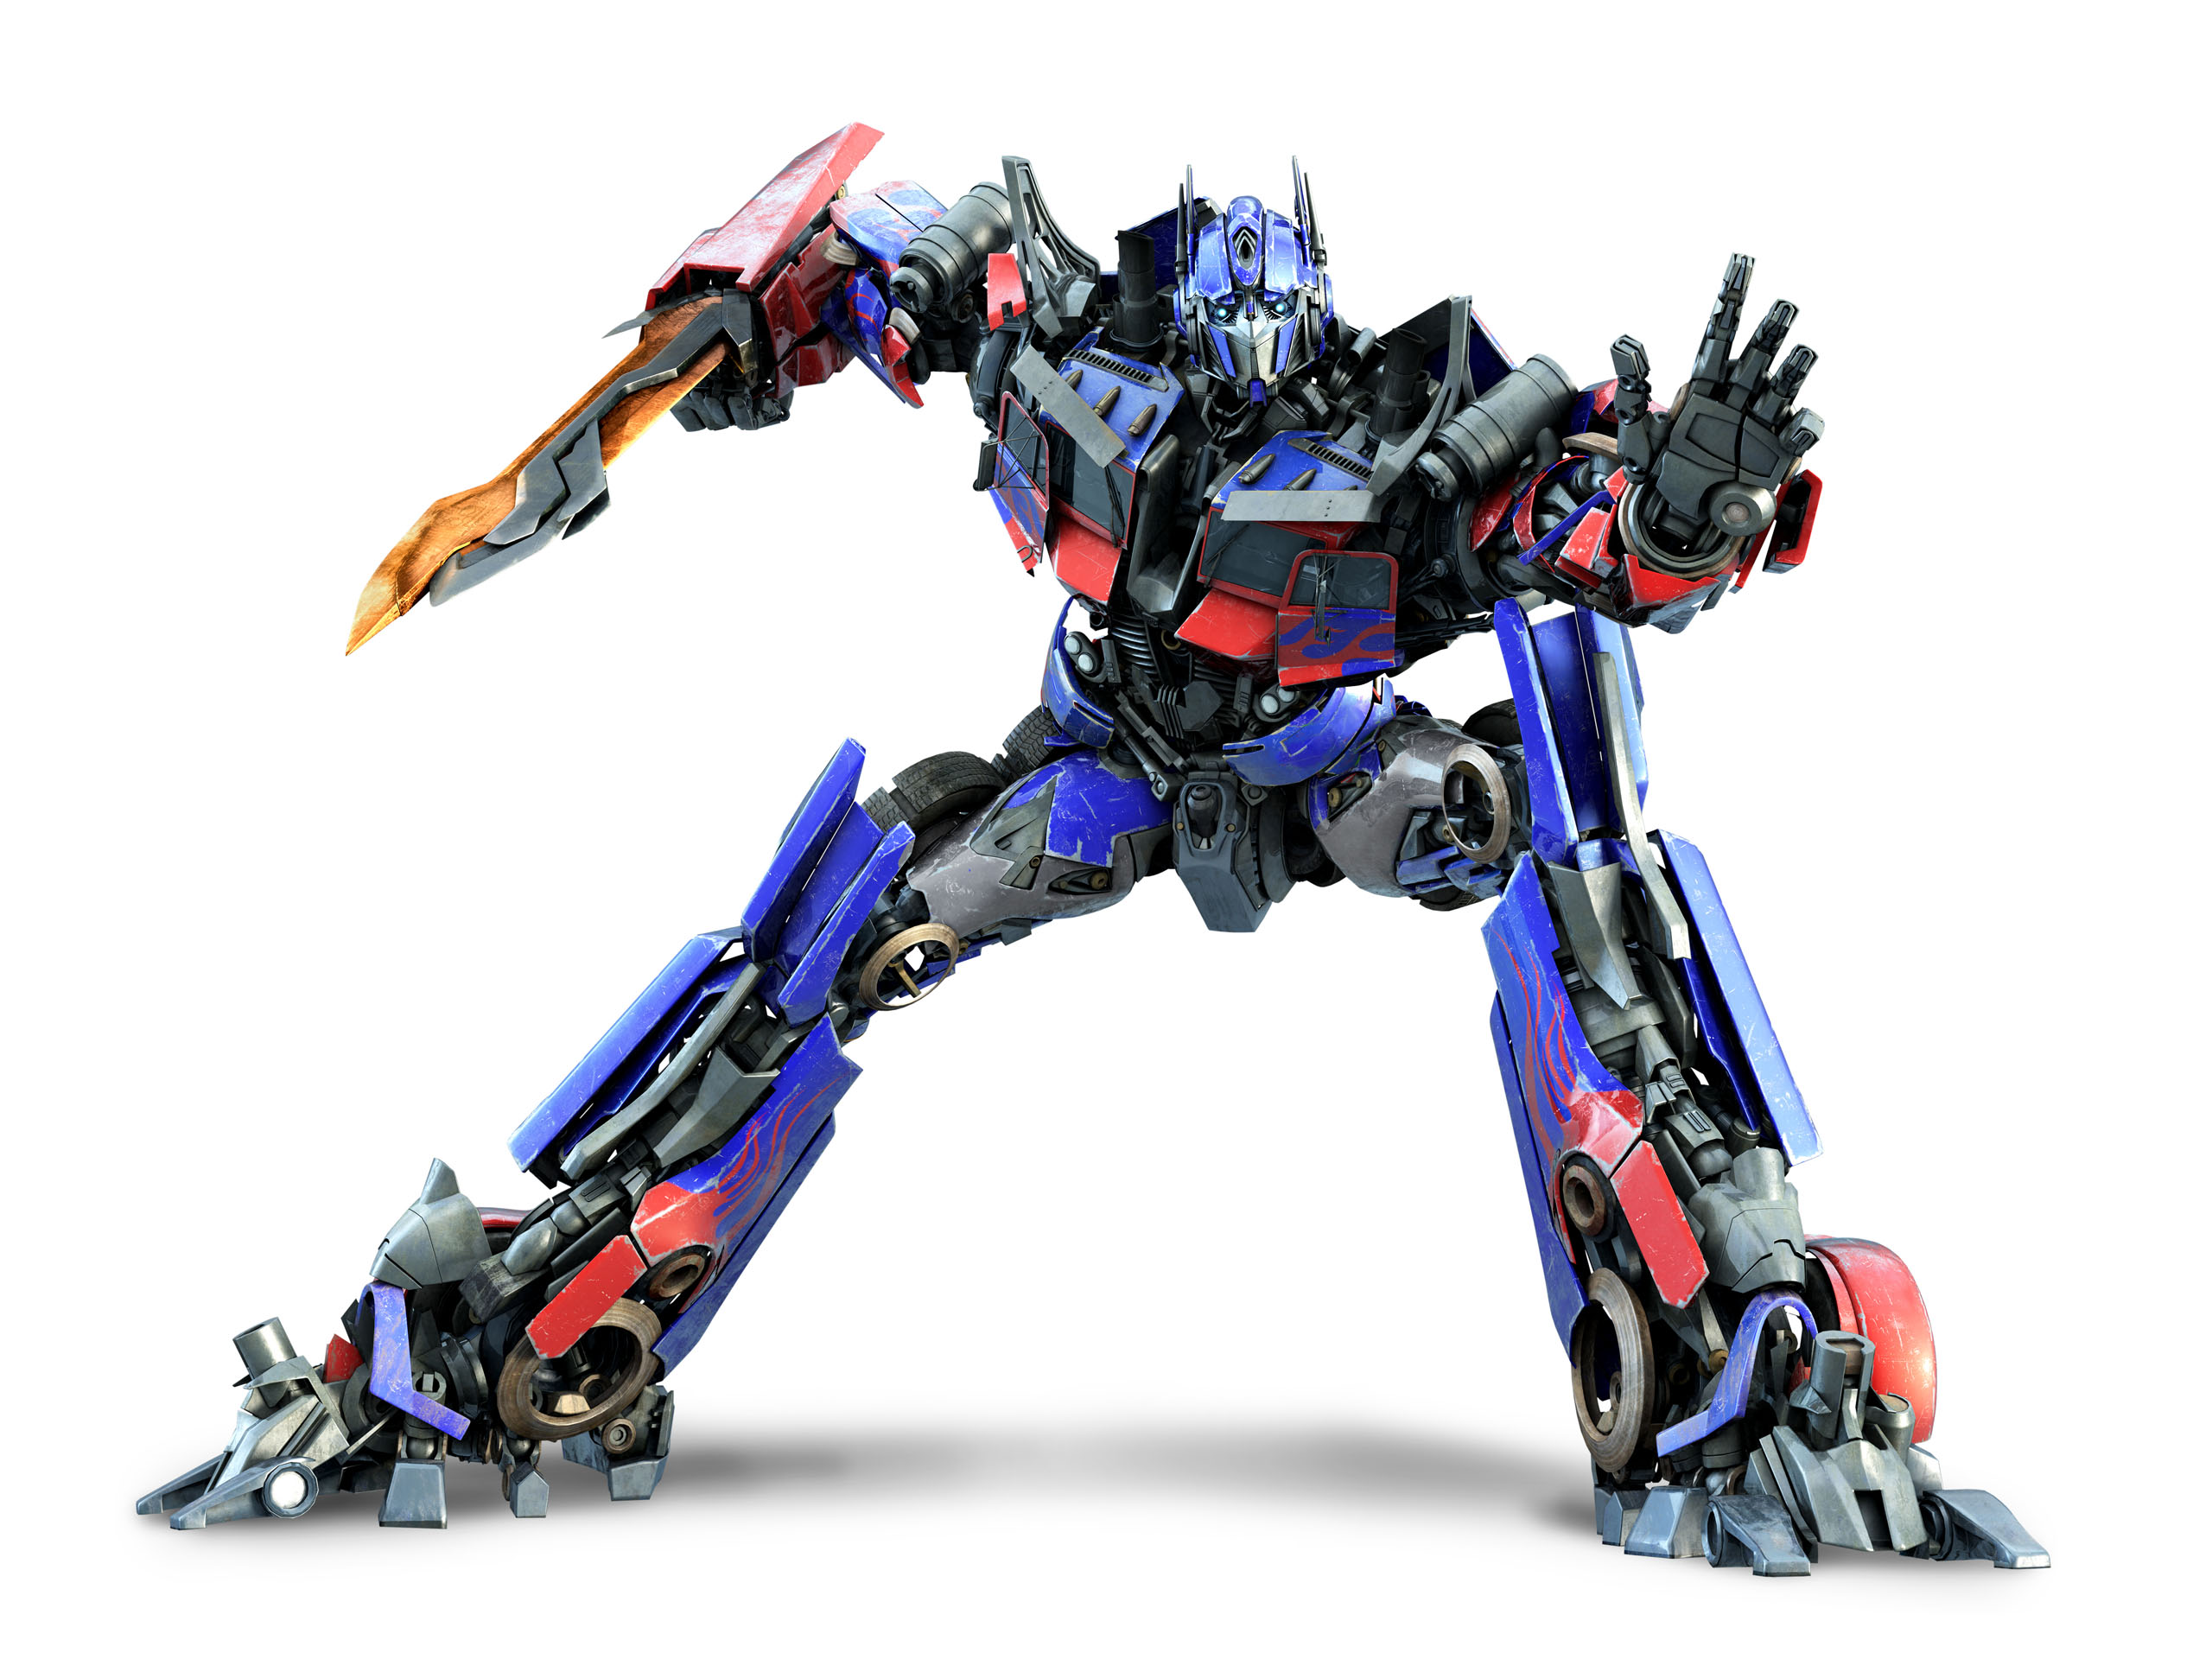 Transformers Optimus Prime Wallpaper hd 2560x1920